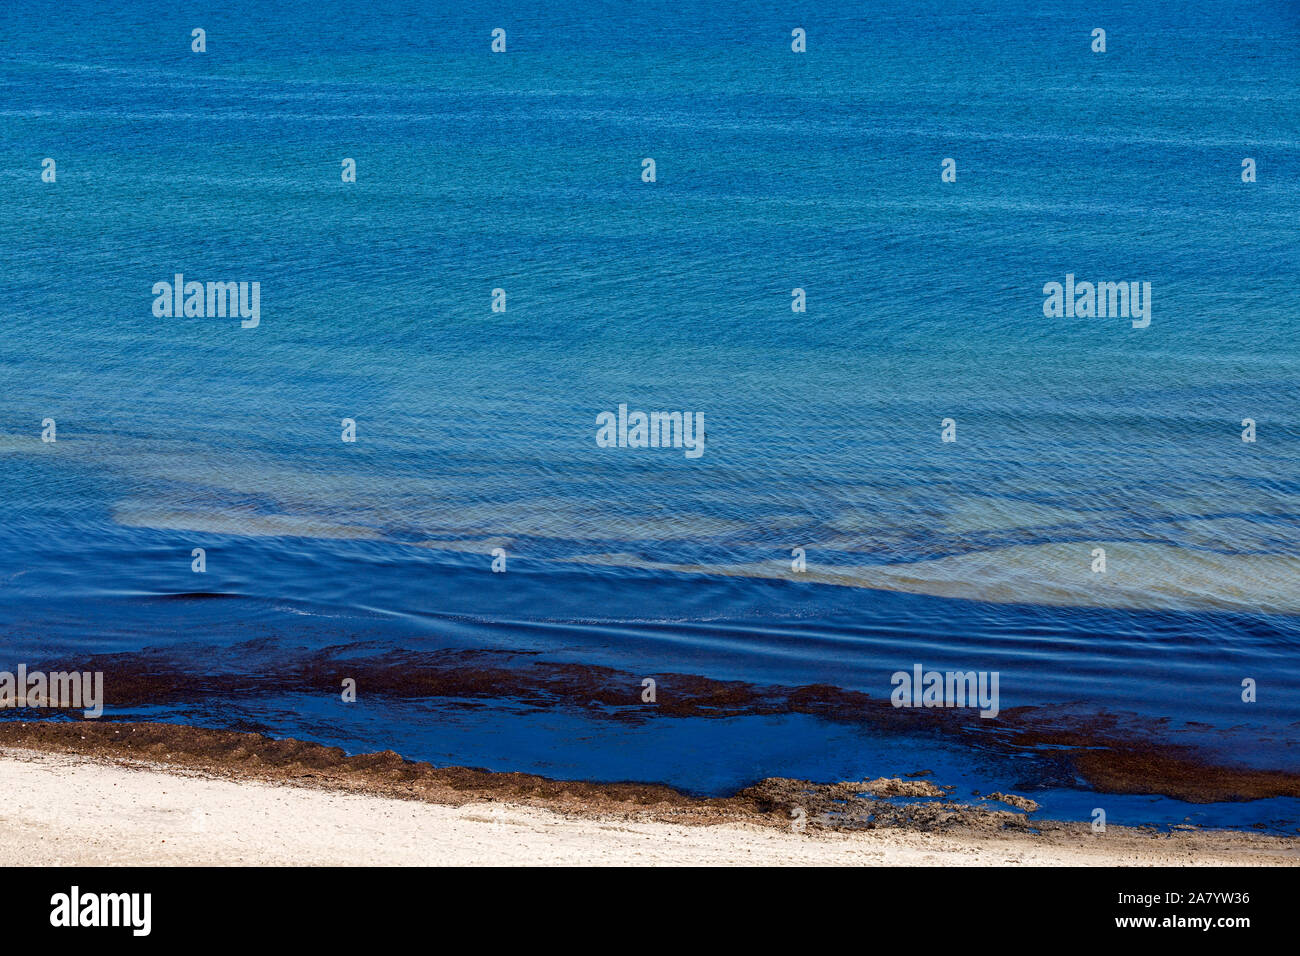 Strand, Meer, Algen, blau Stock Photo